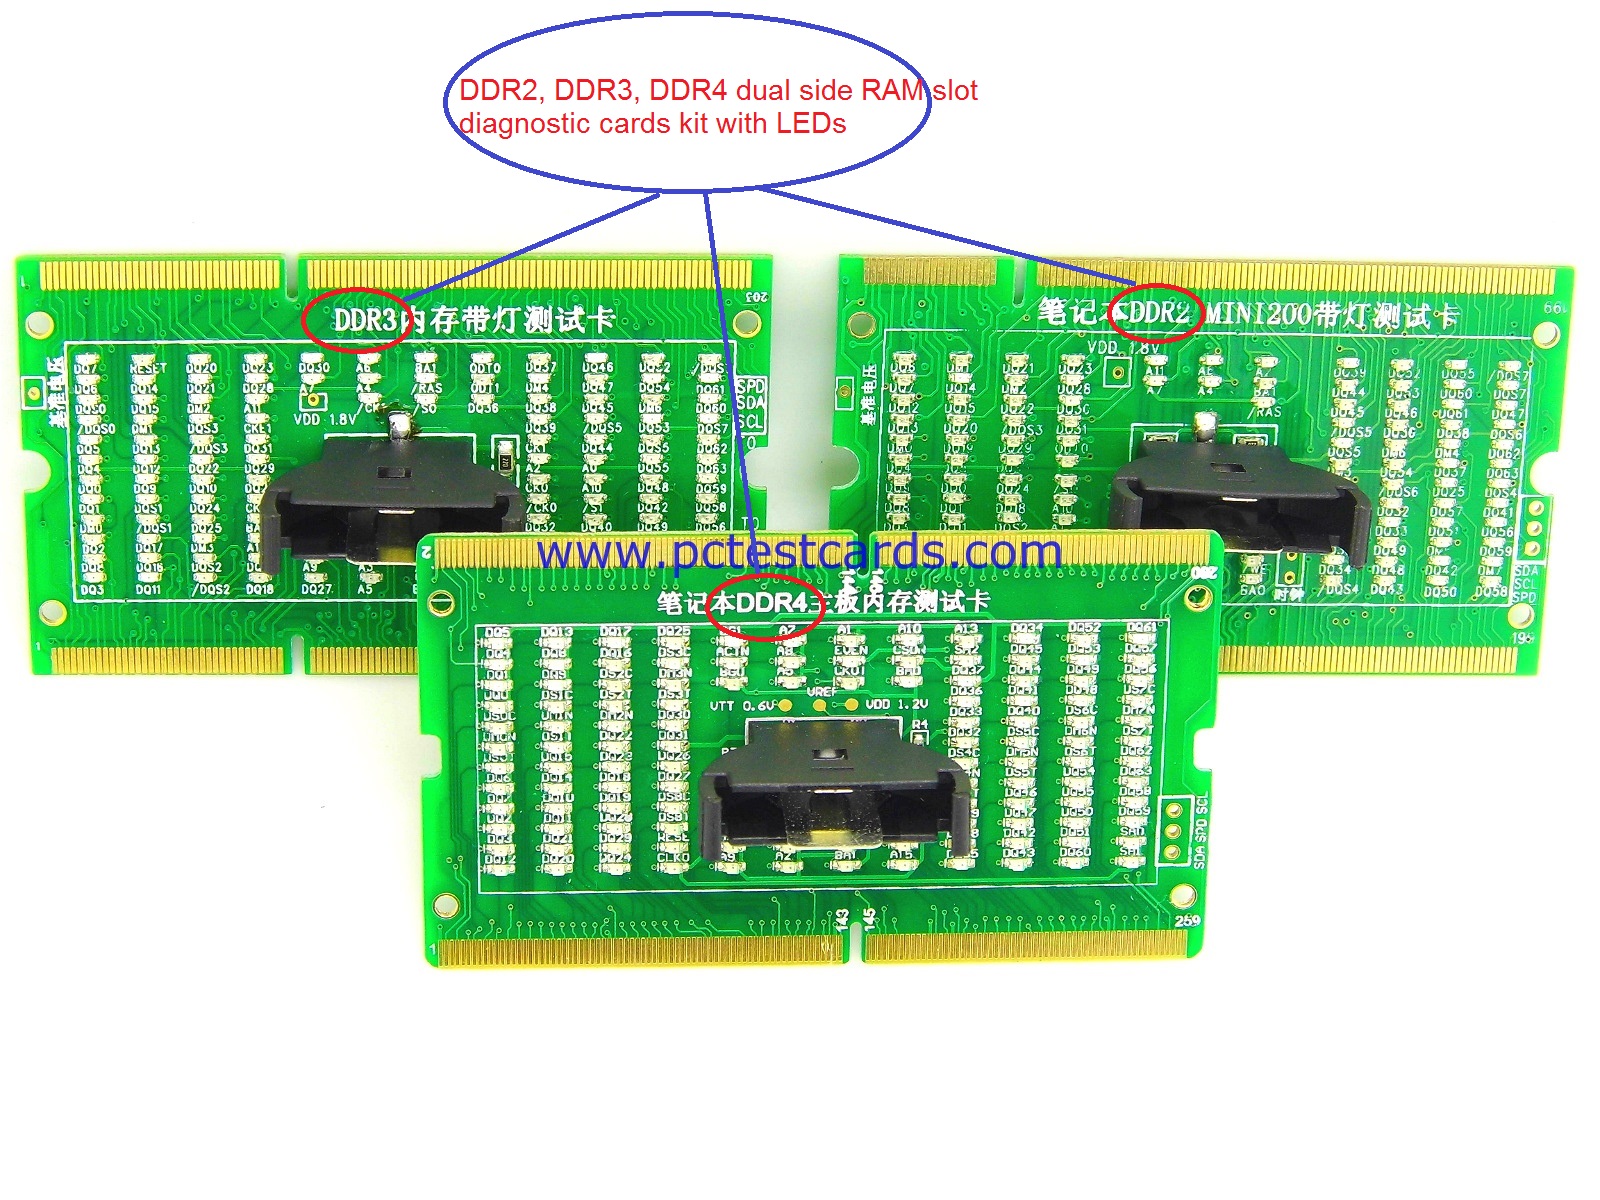 New Latest Laptop Computer DDR4 DDR3 DDR2 RAM Slot Diagnostic Cards Kit with LEDs